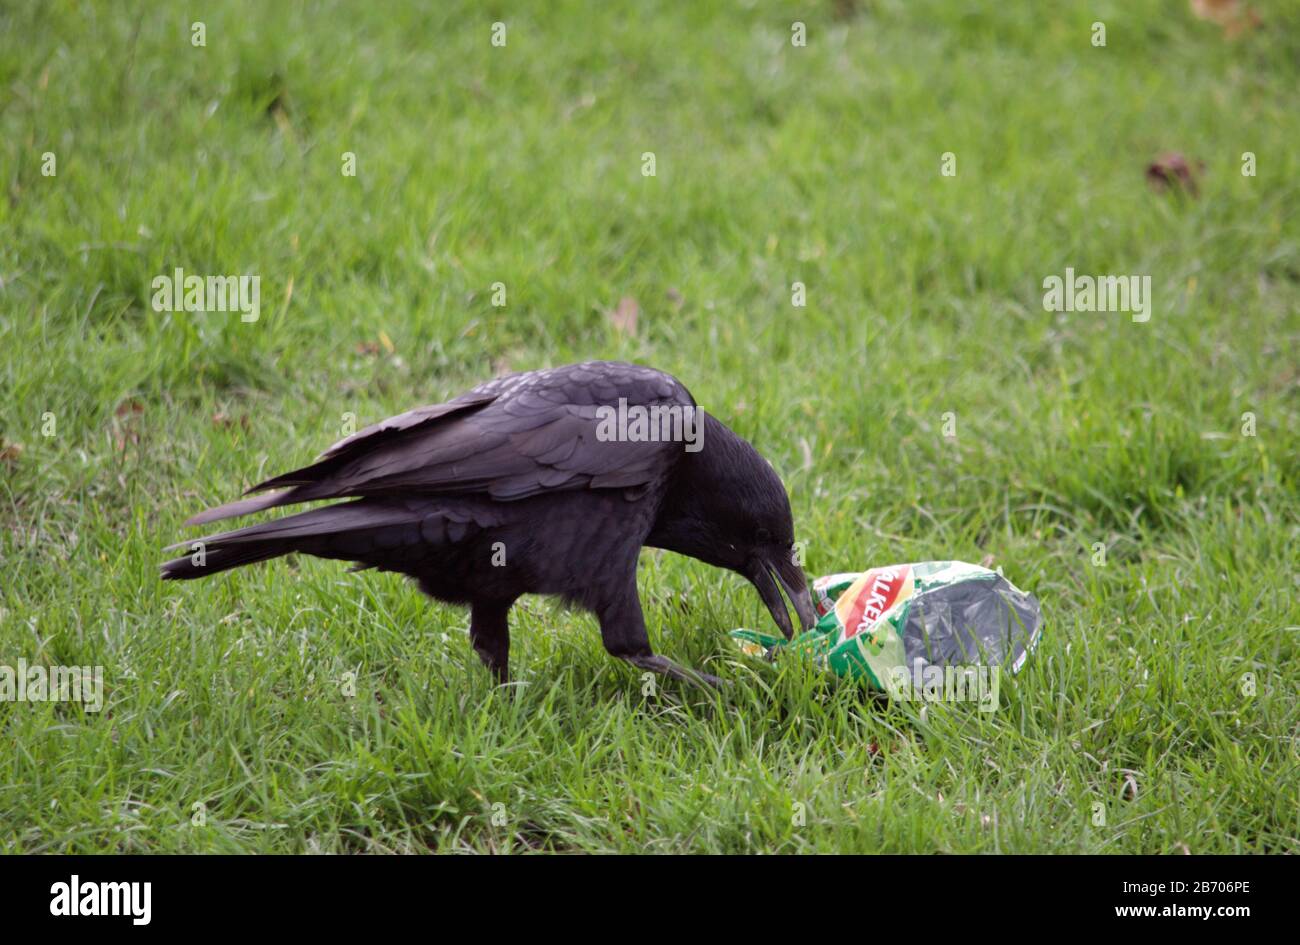 A crow carrying a crisp packet in Kensington Gardens, London, UK Stock Photo